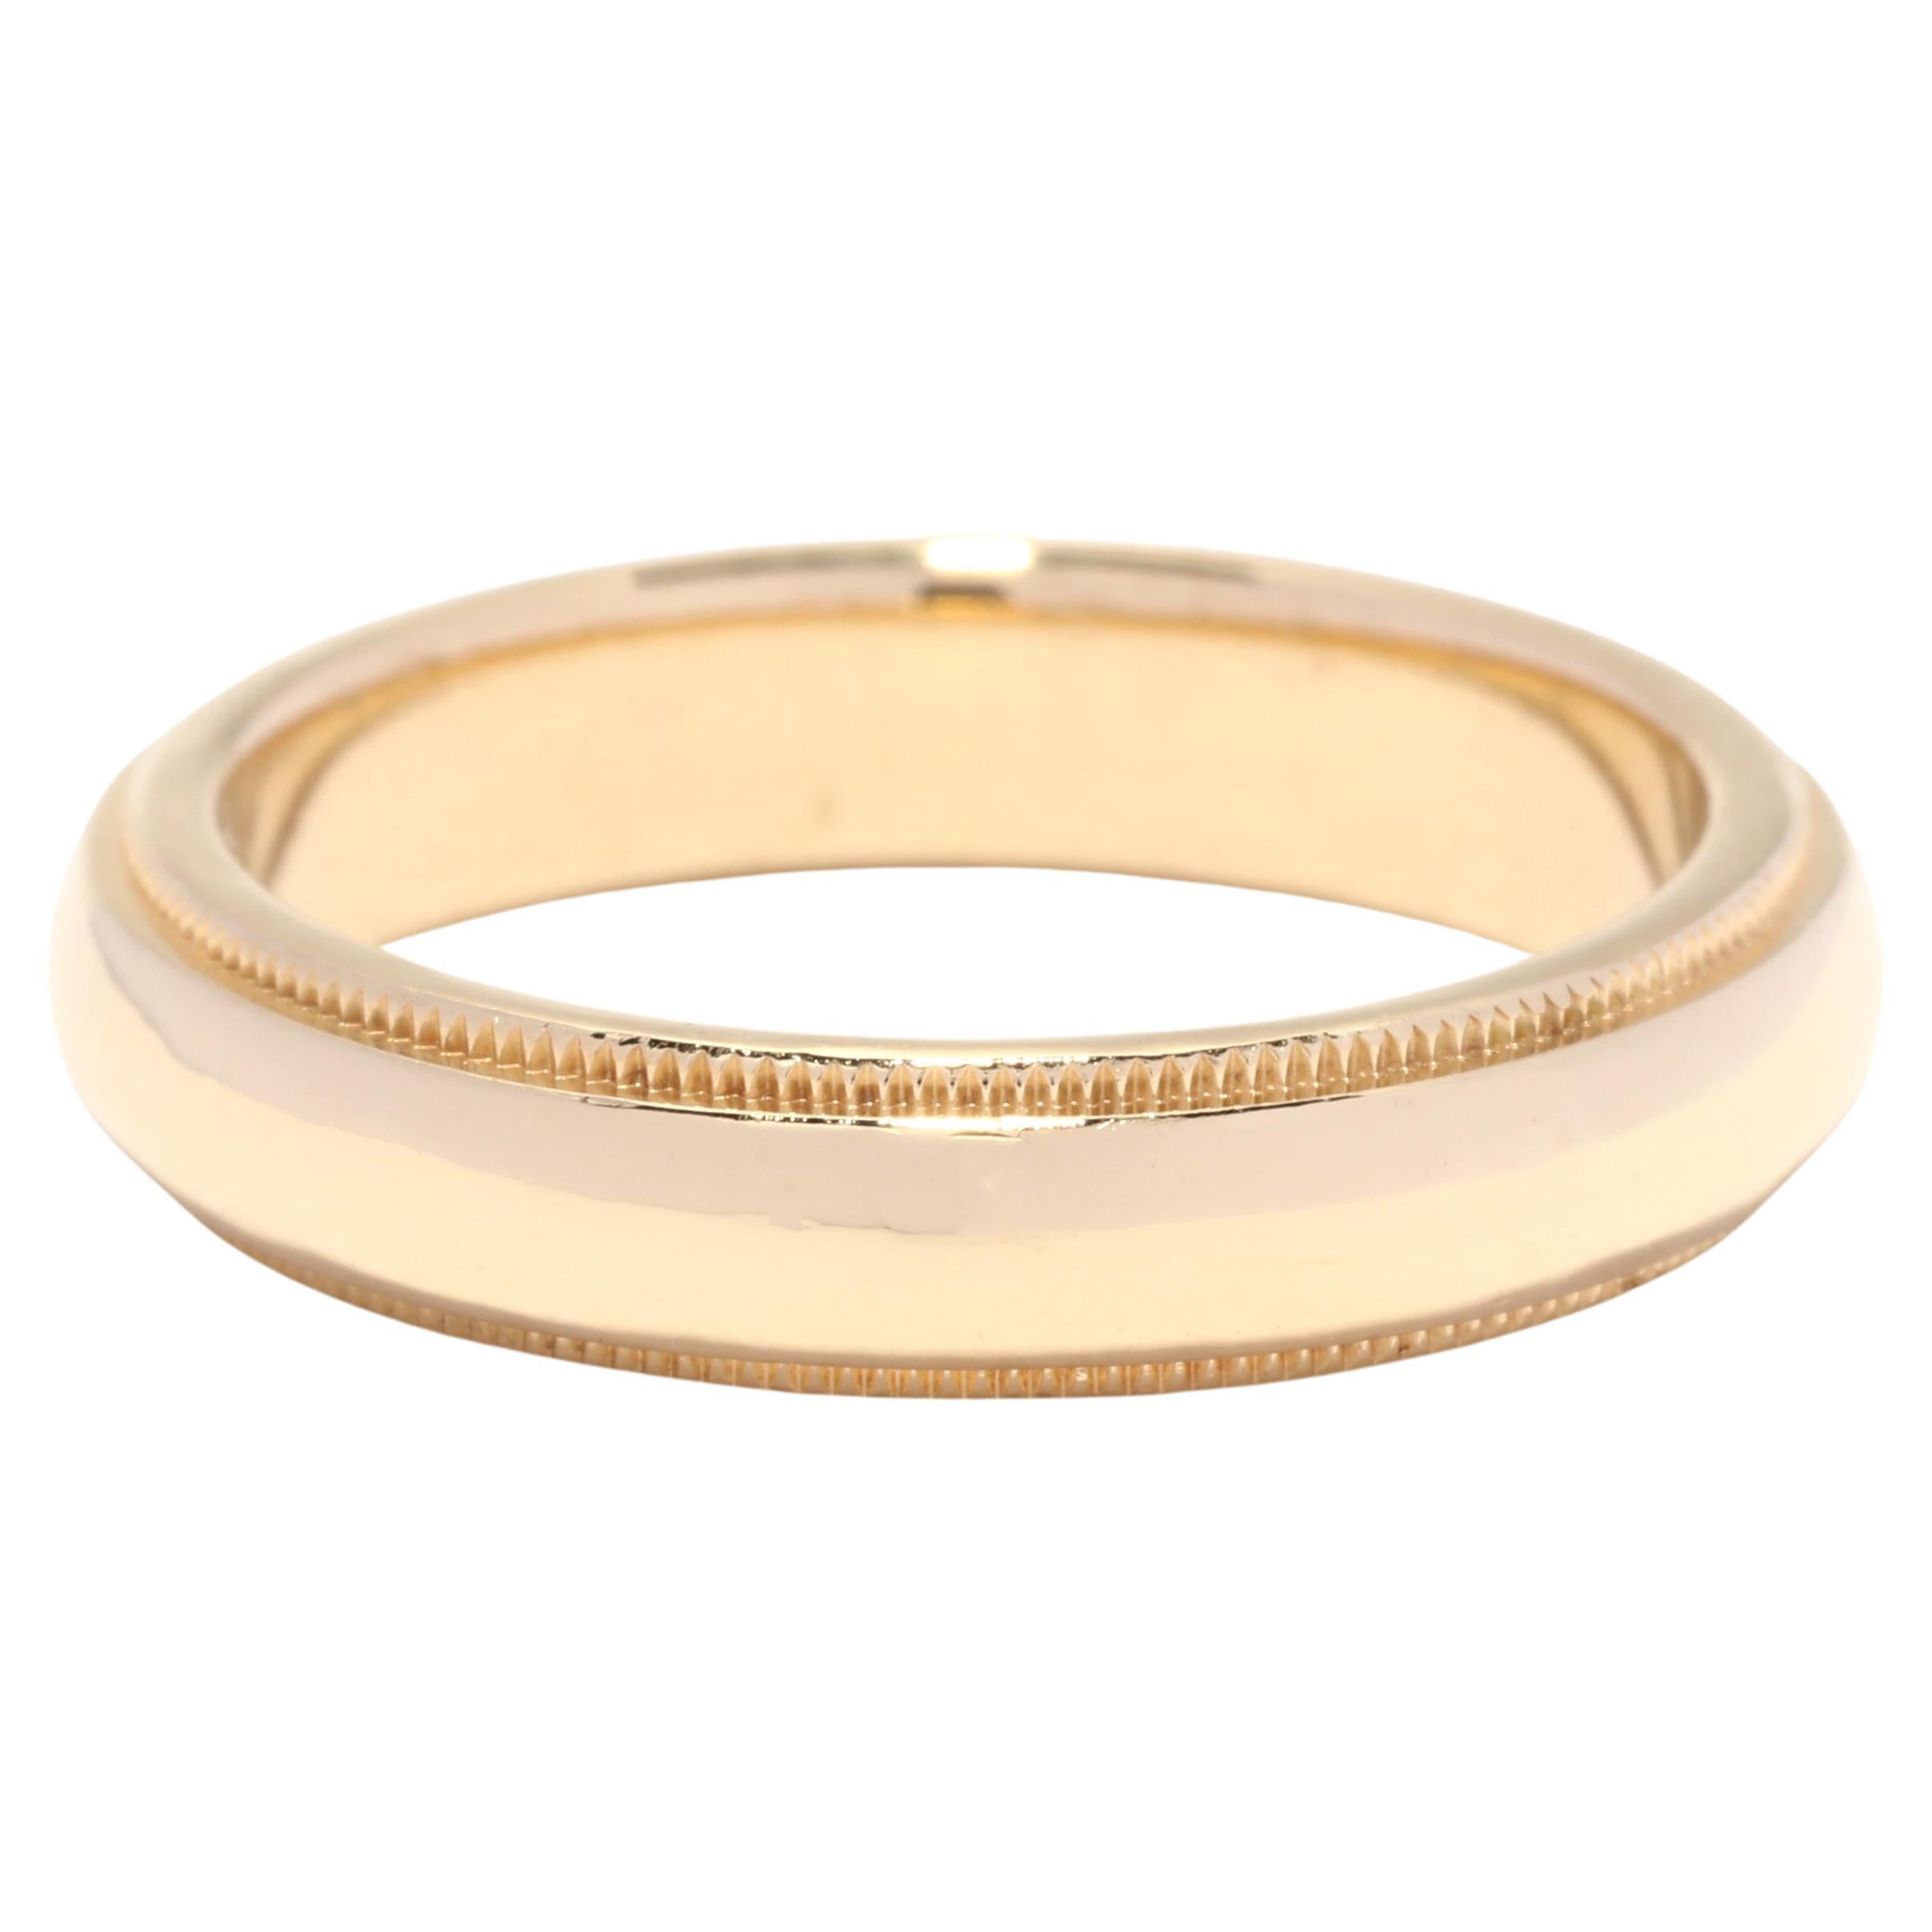 Tiffany and Company Milgrain Wedding Band, 18K Yellow Gold, Ring Size 6.25